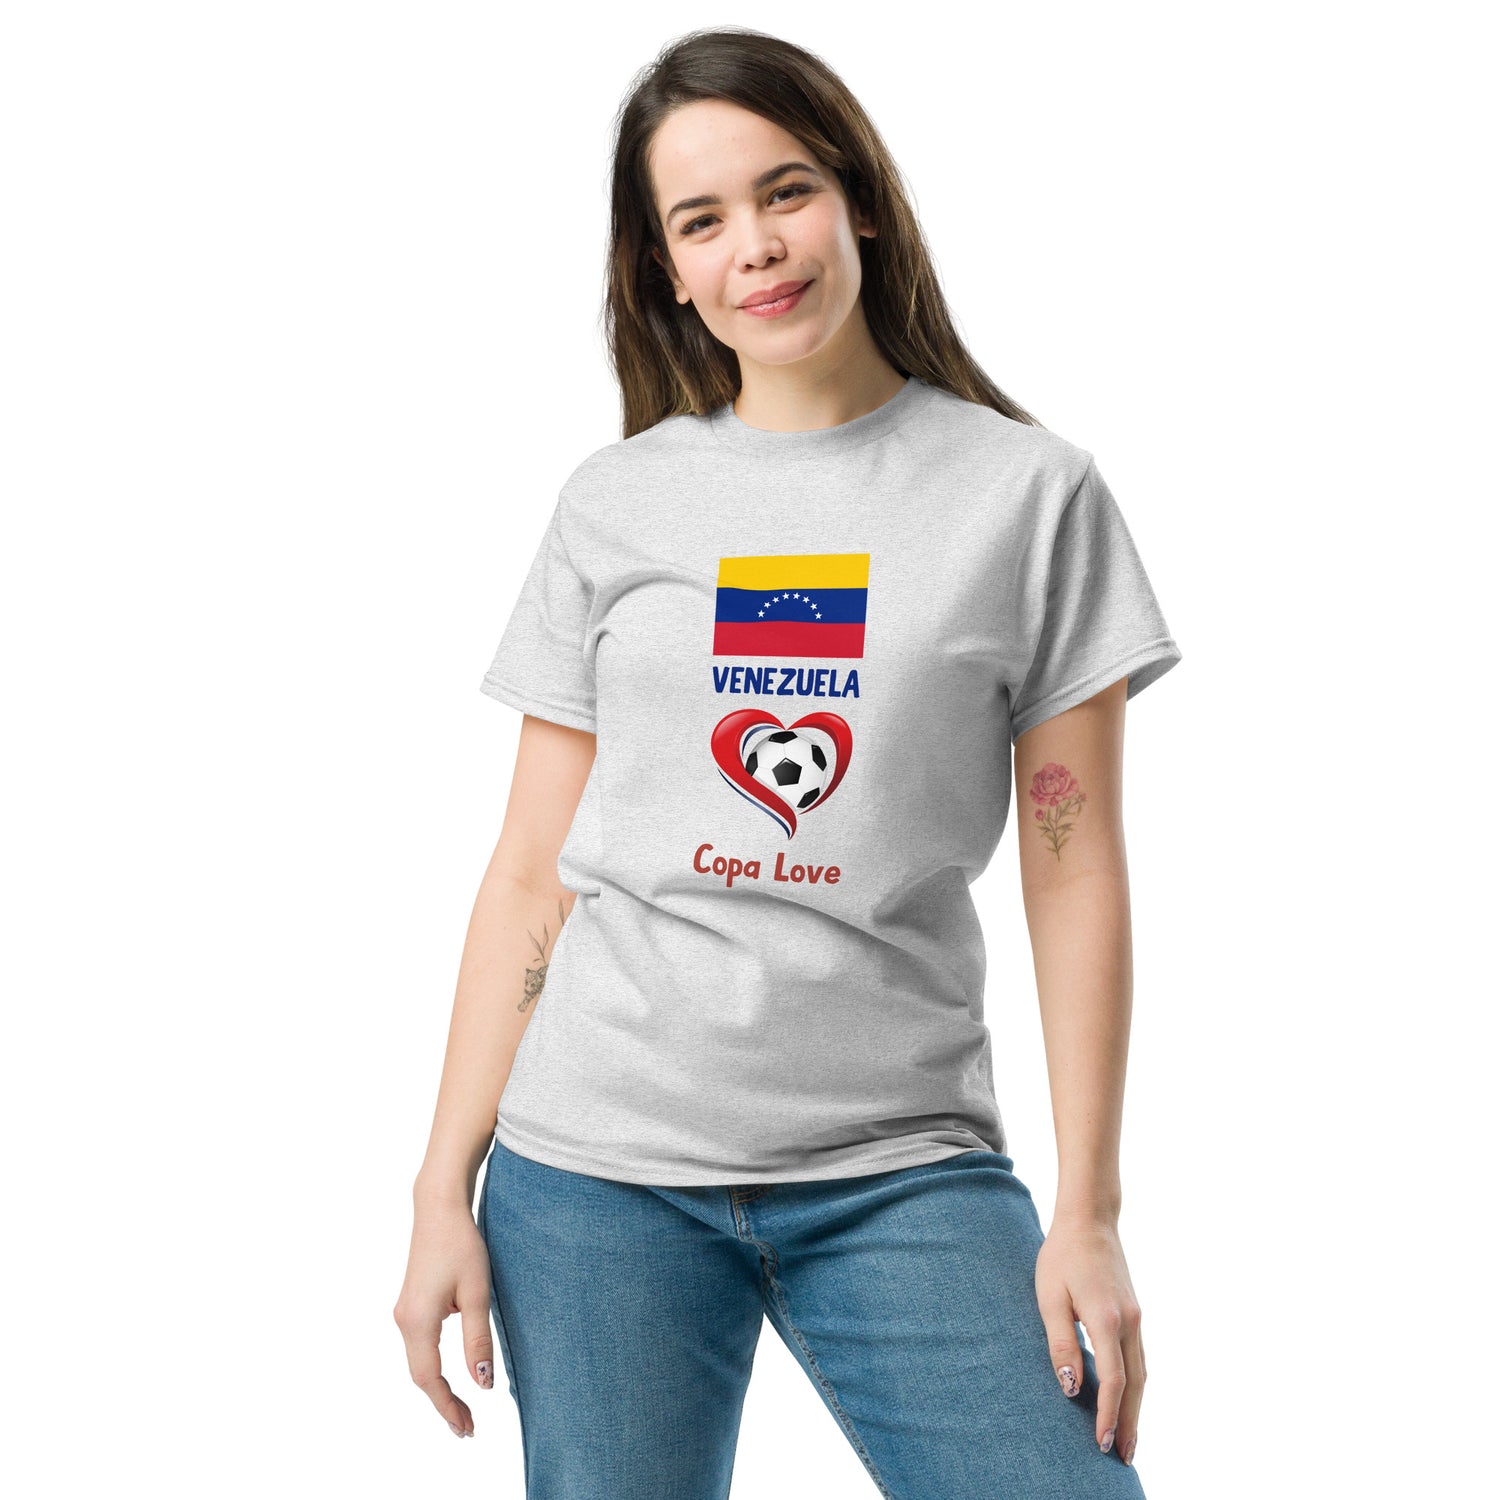 VENEZUELA - Copa Love - Men's classic tee